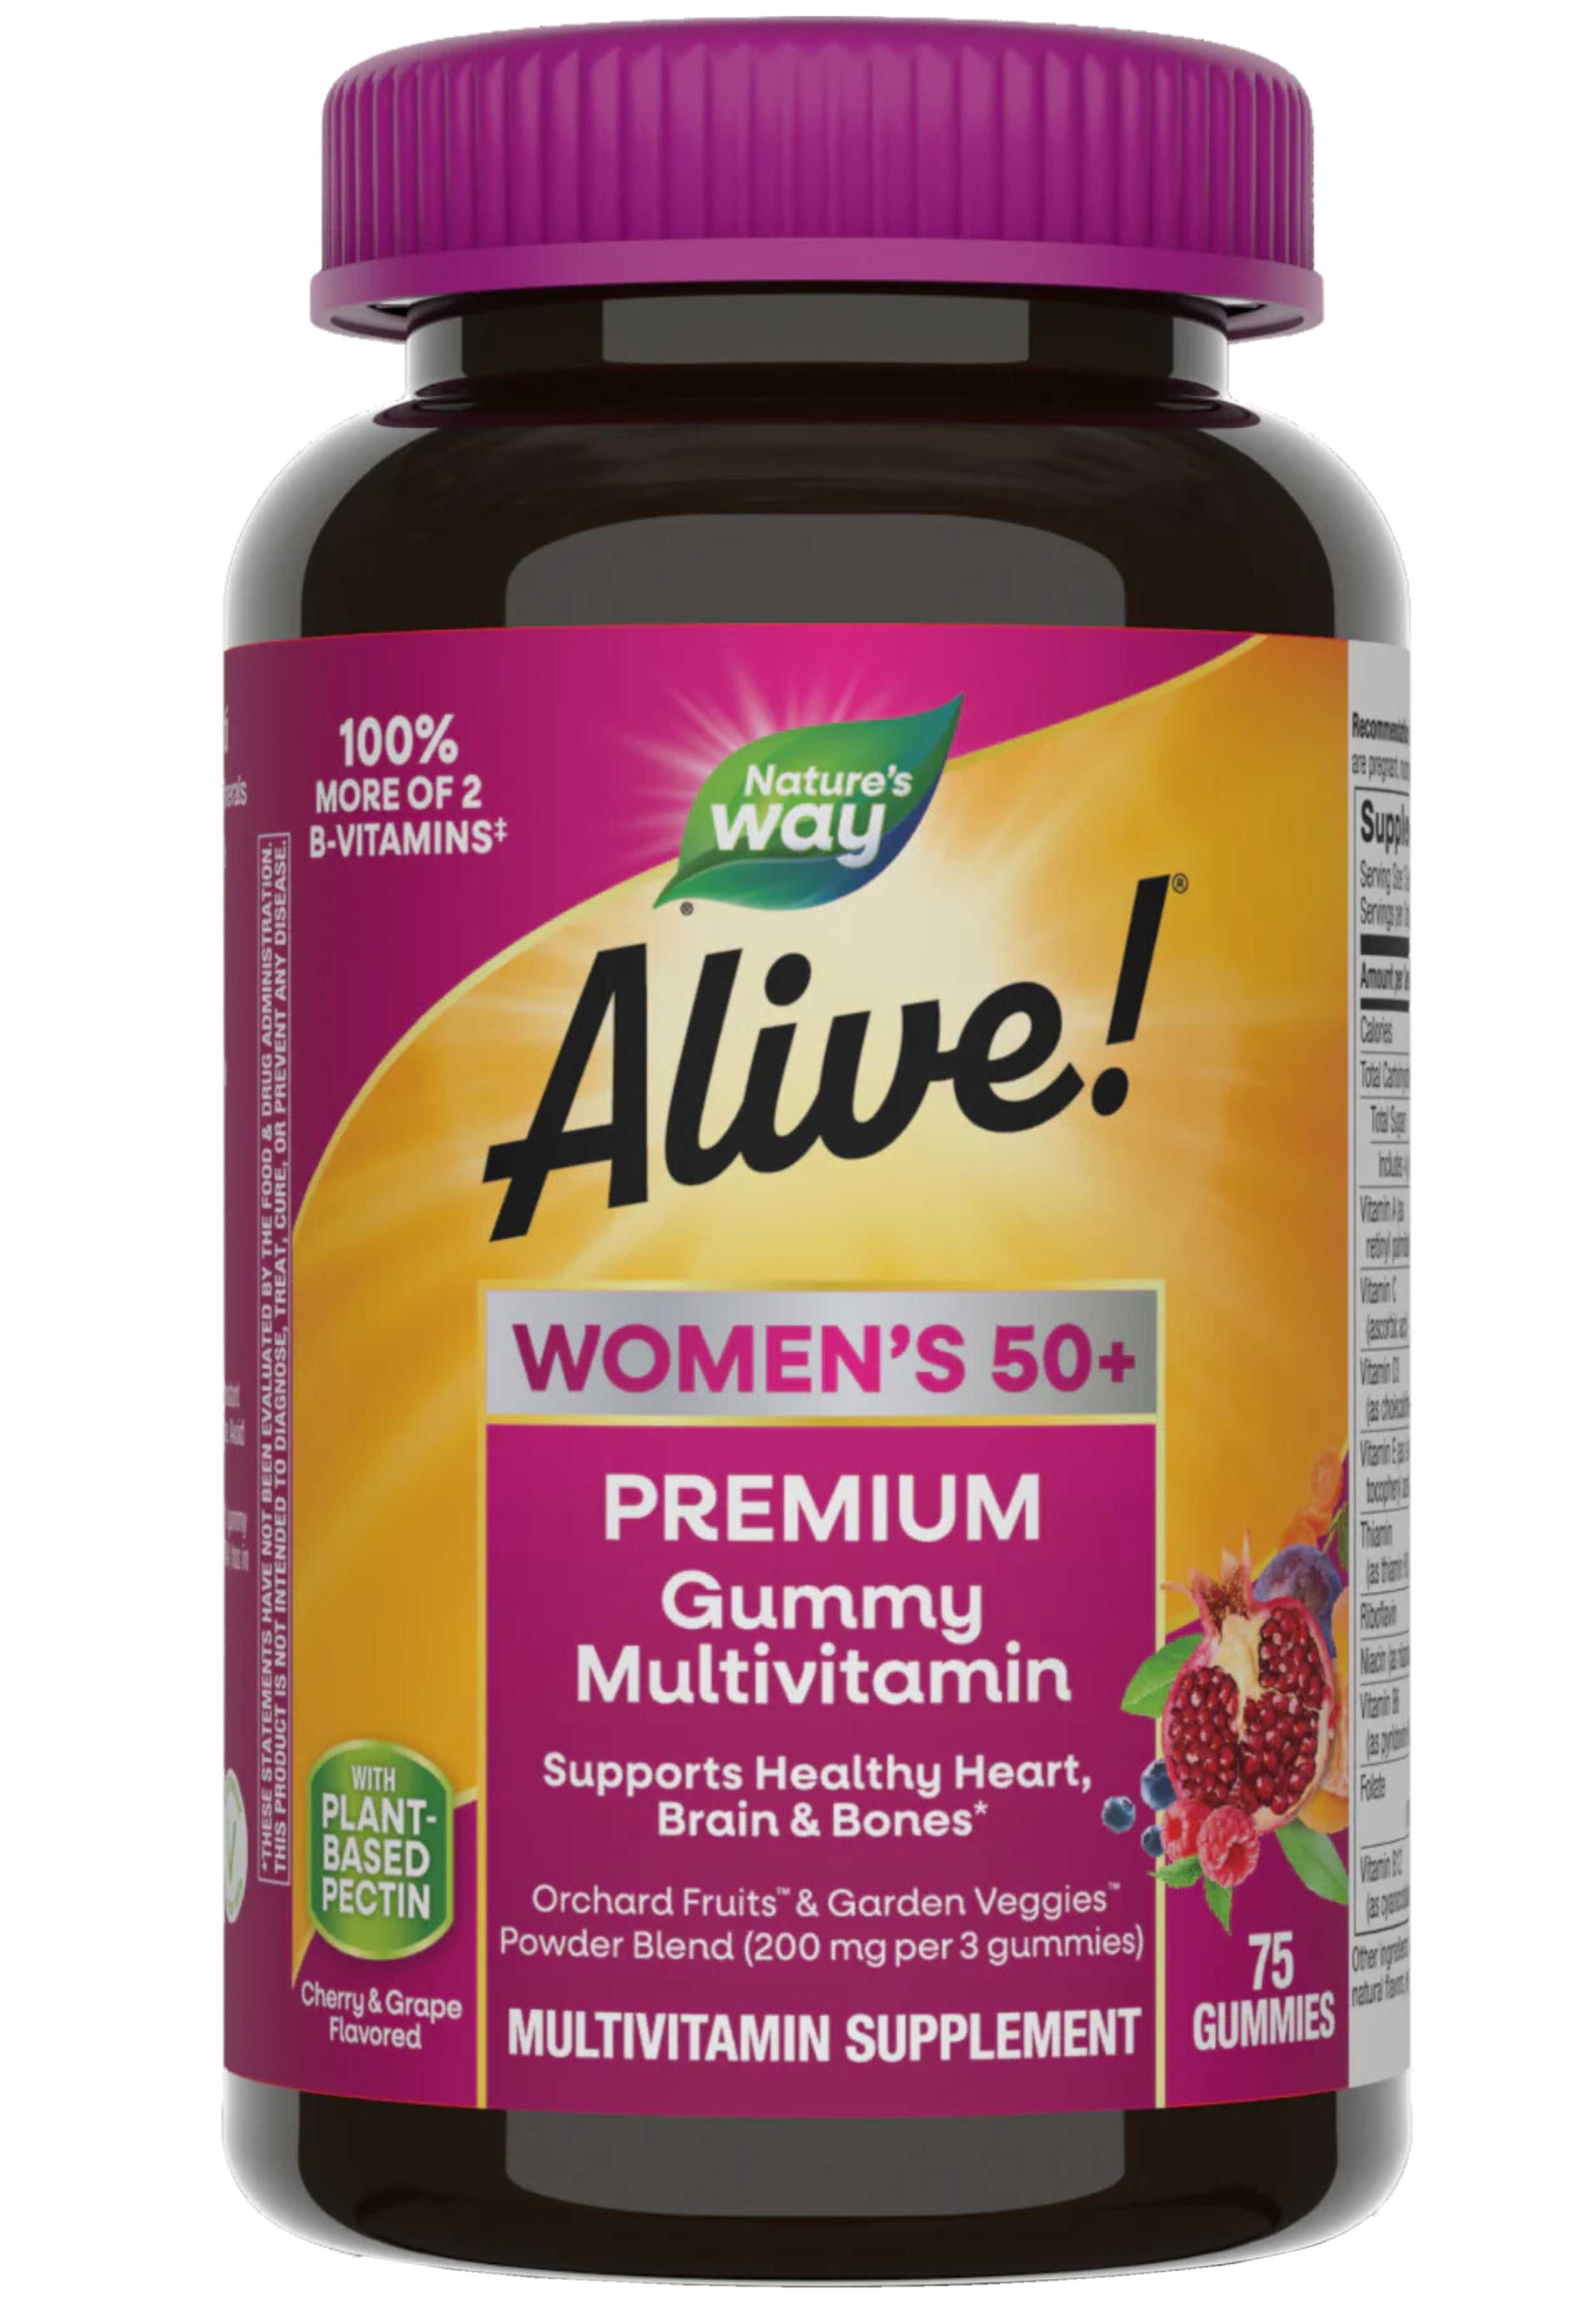 Nature's Way Alive! Women's 50+ Premium Gummy Multivitamin